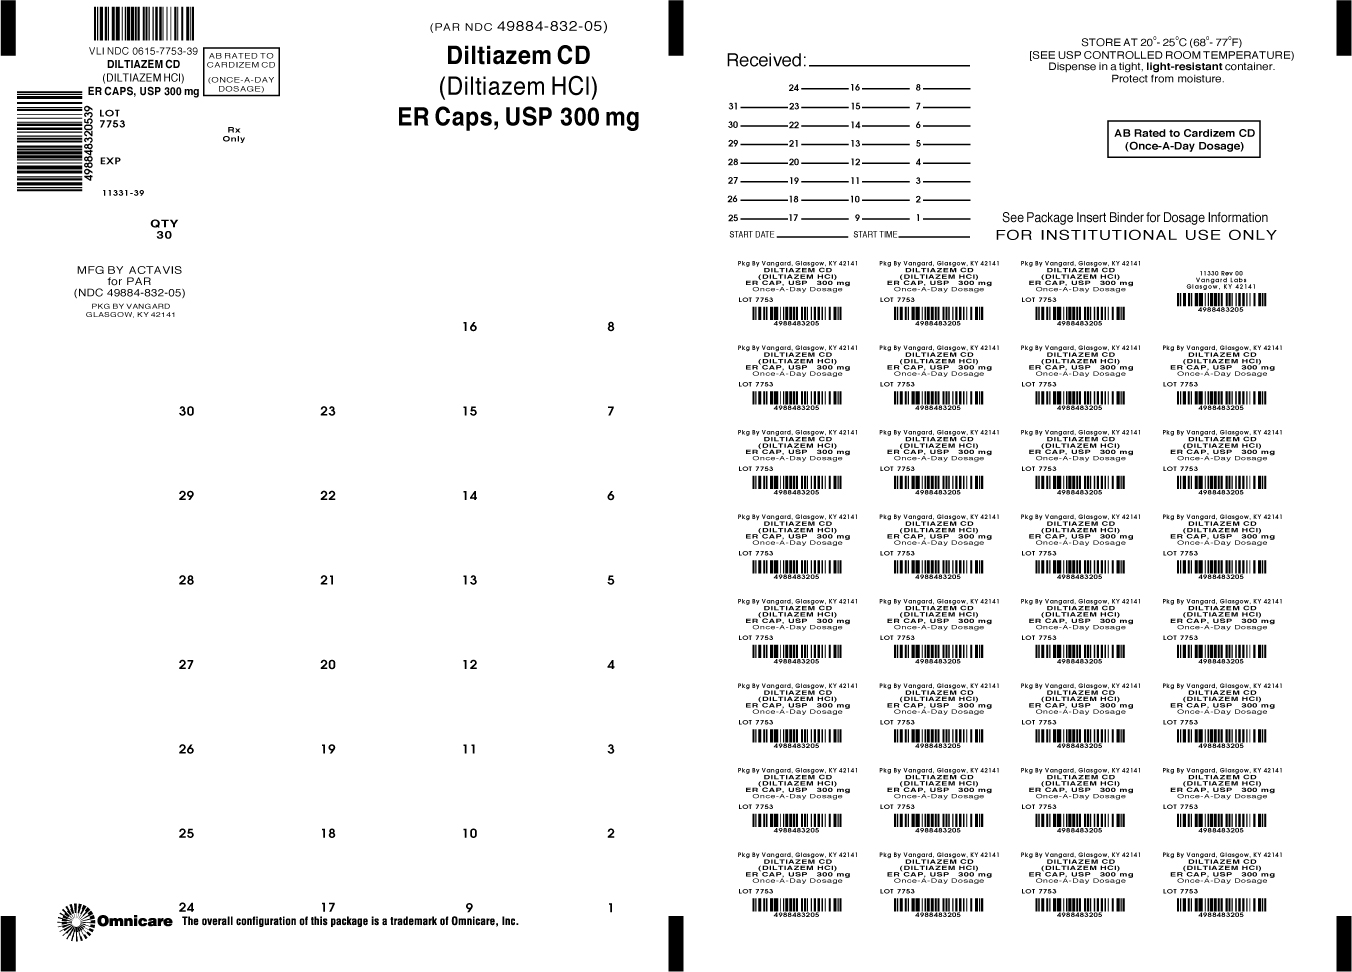 Principal Display Panel- Diltiazem CD ER Caps, USP 300mg